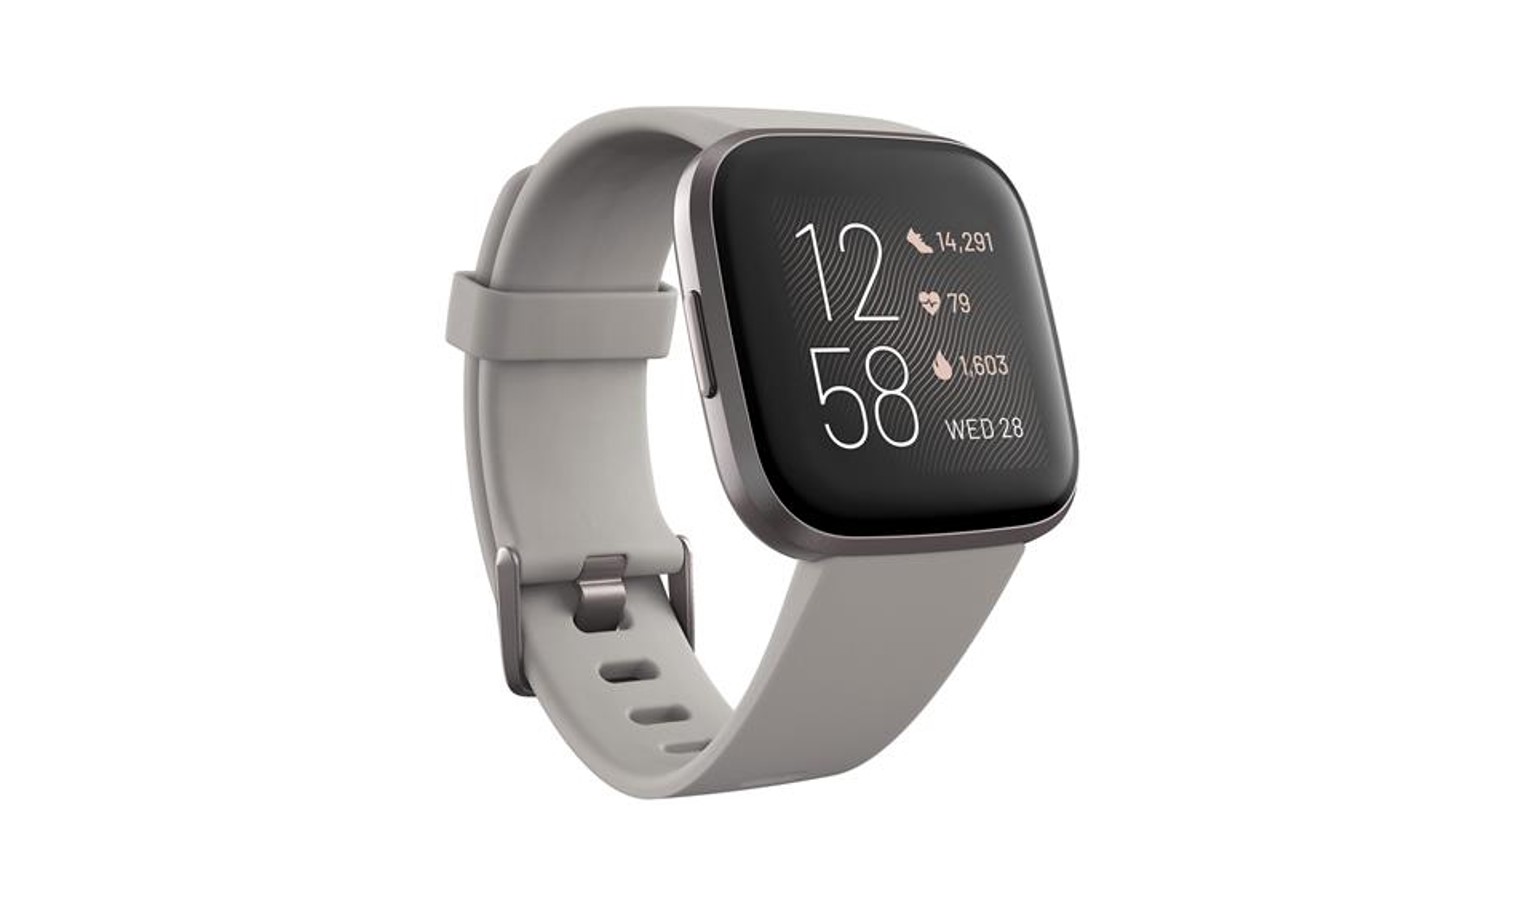 Smartwatch - Stone/Mist Gray Aluminum 